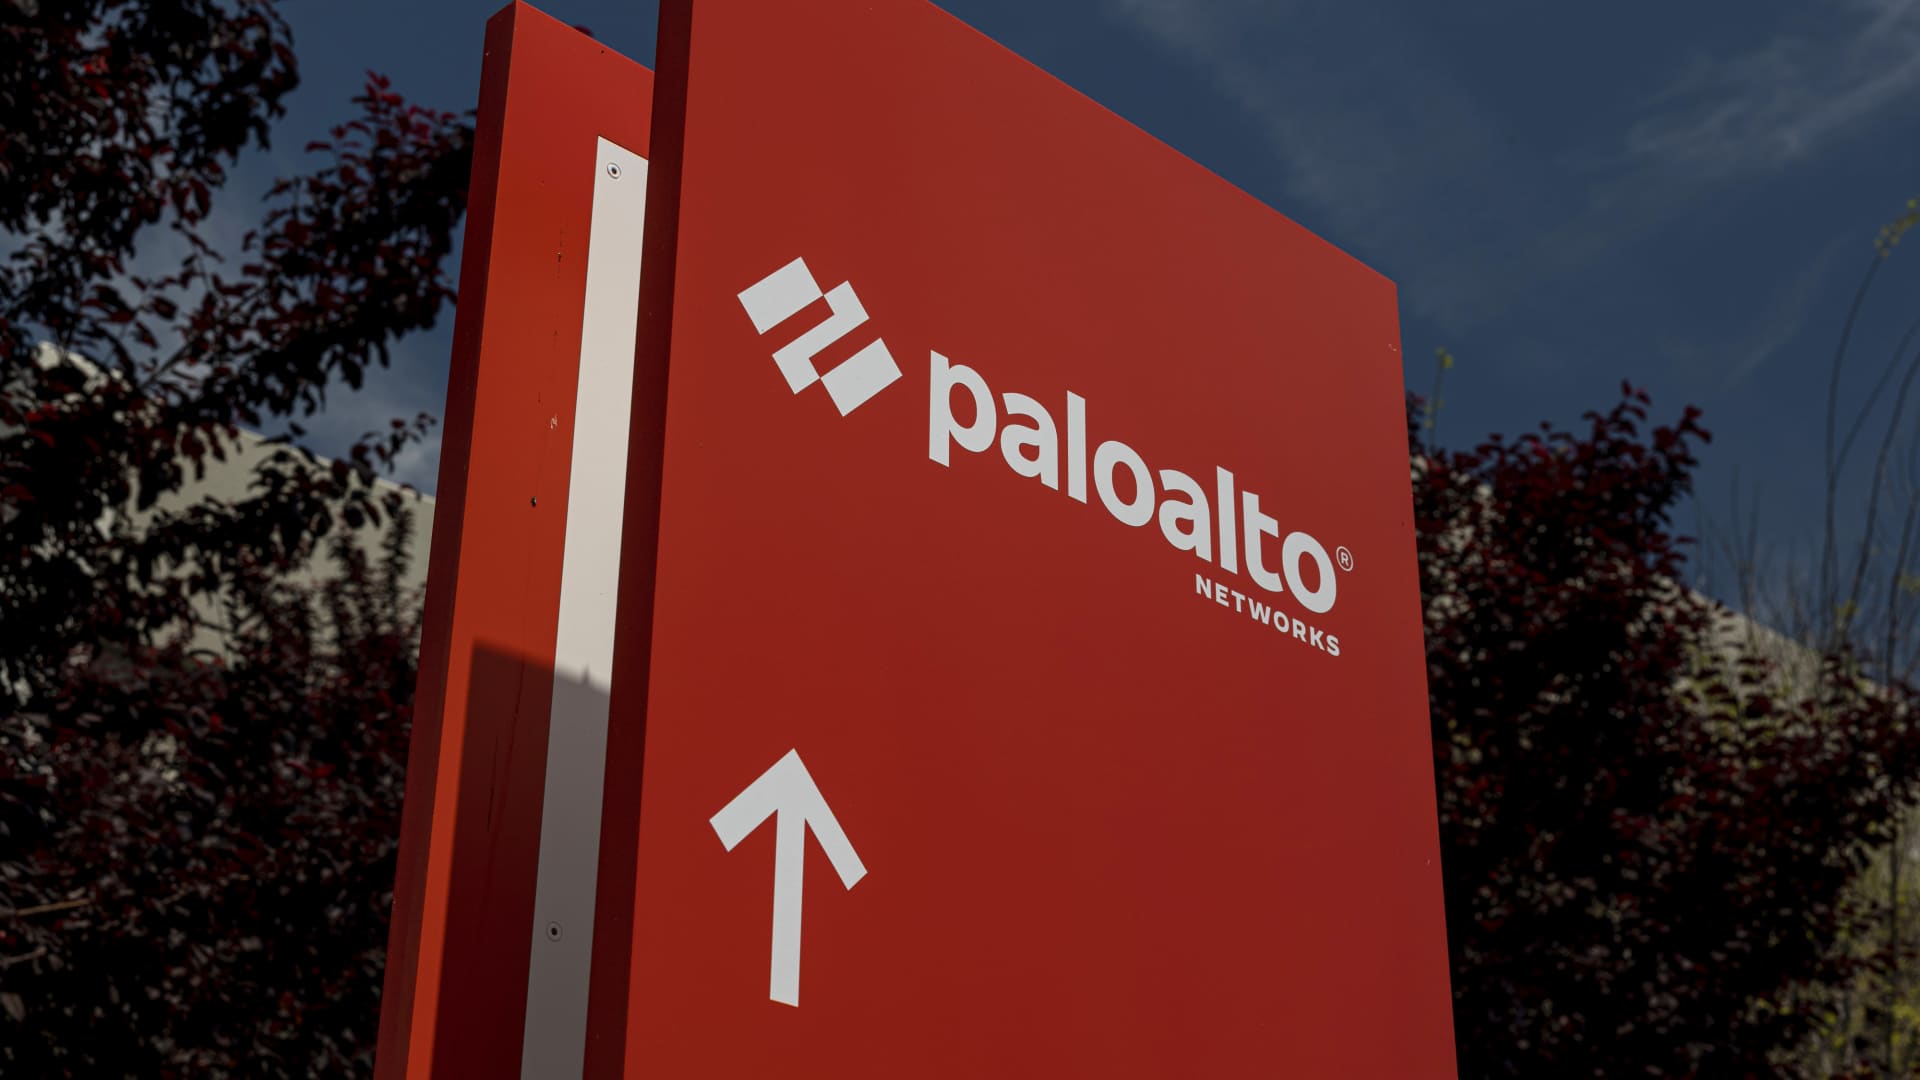 Here’s the secret sauce that fueled Palo Alto Networks’ beat and raise despite tough times